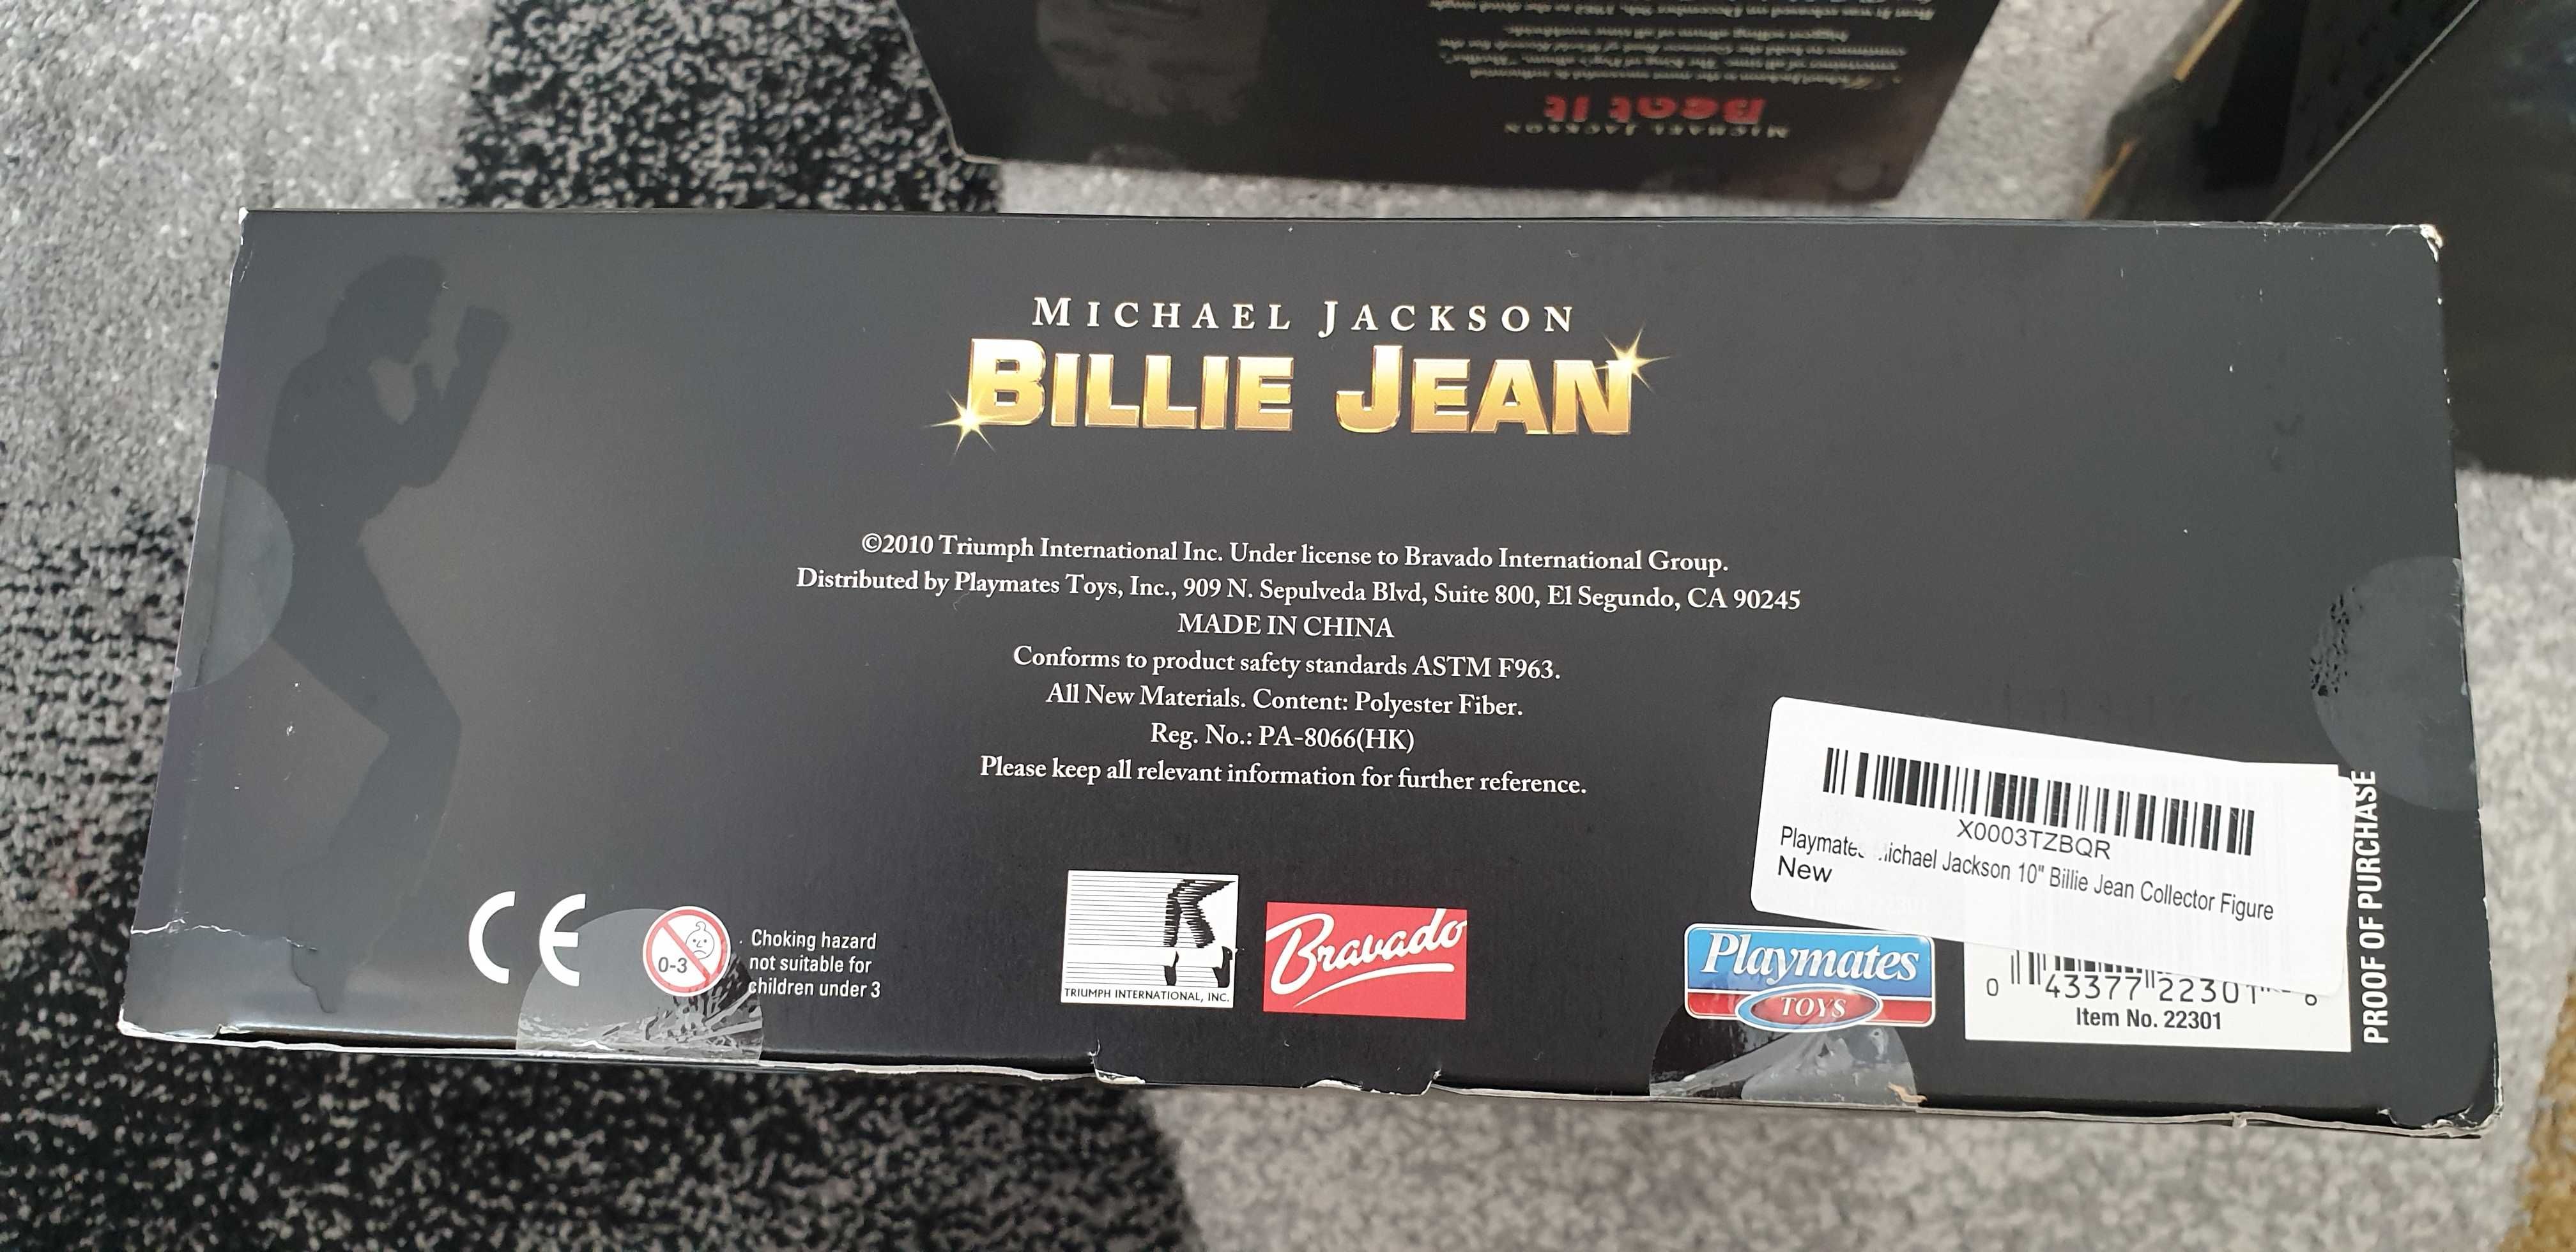 Michael Jackson Billie Jean Playmate (original Bravado)